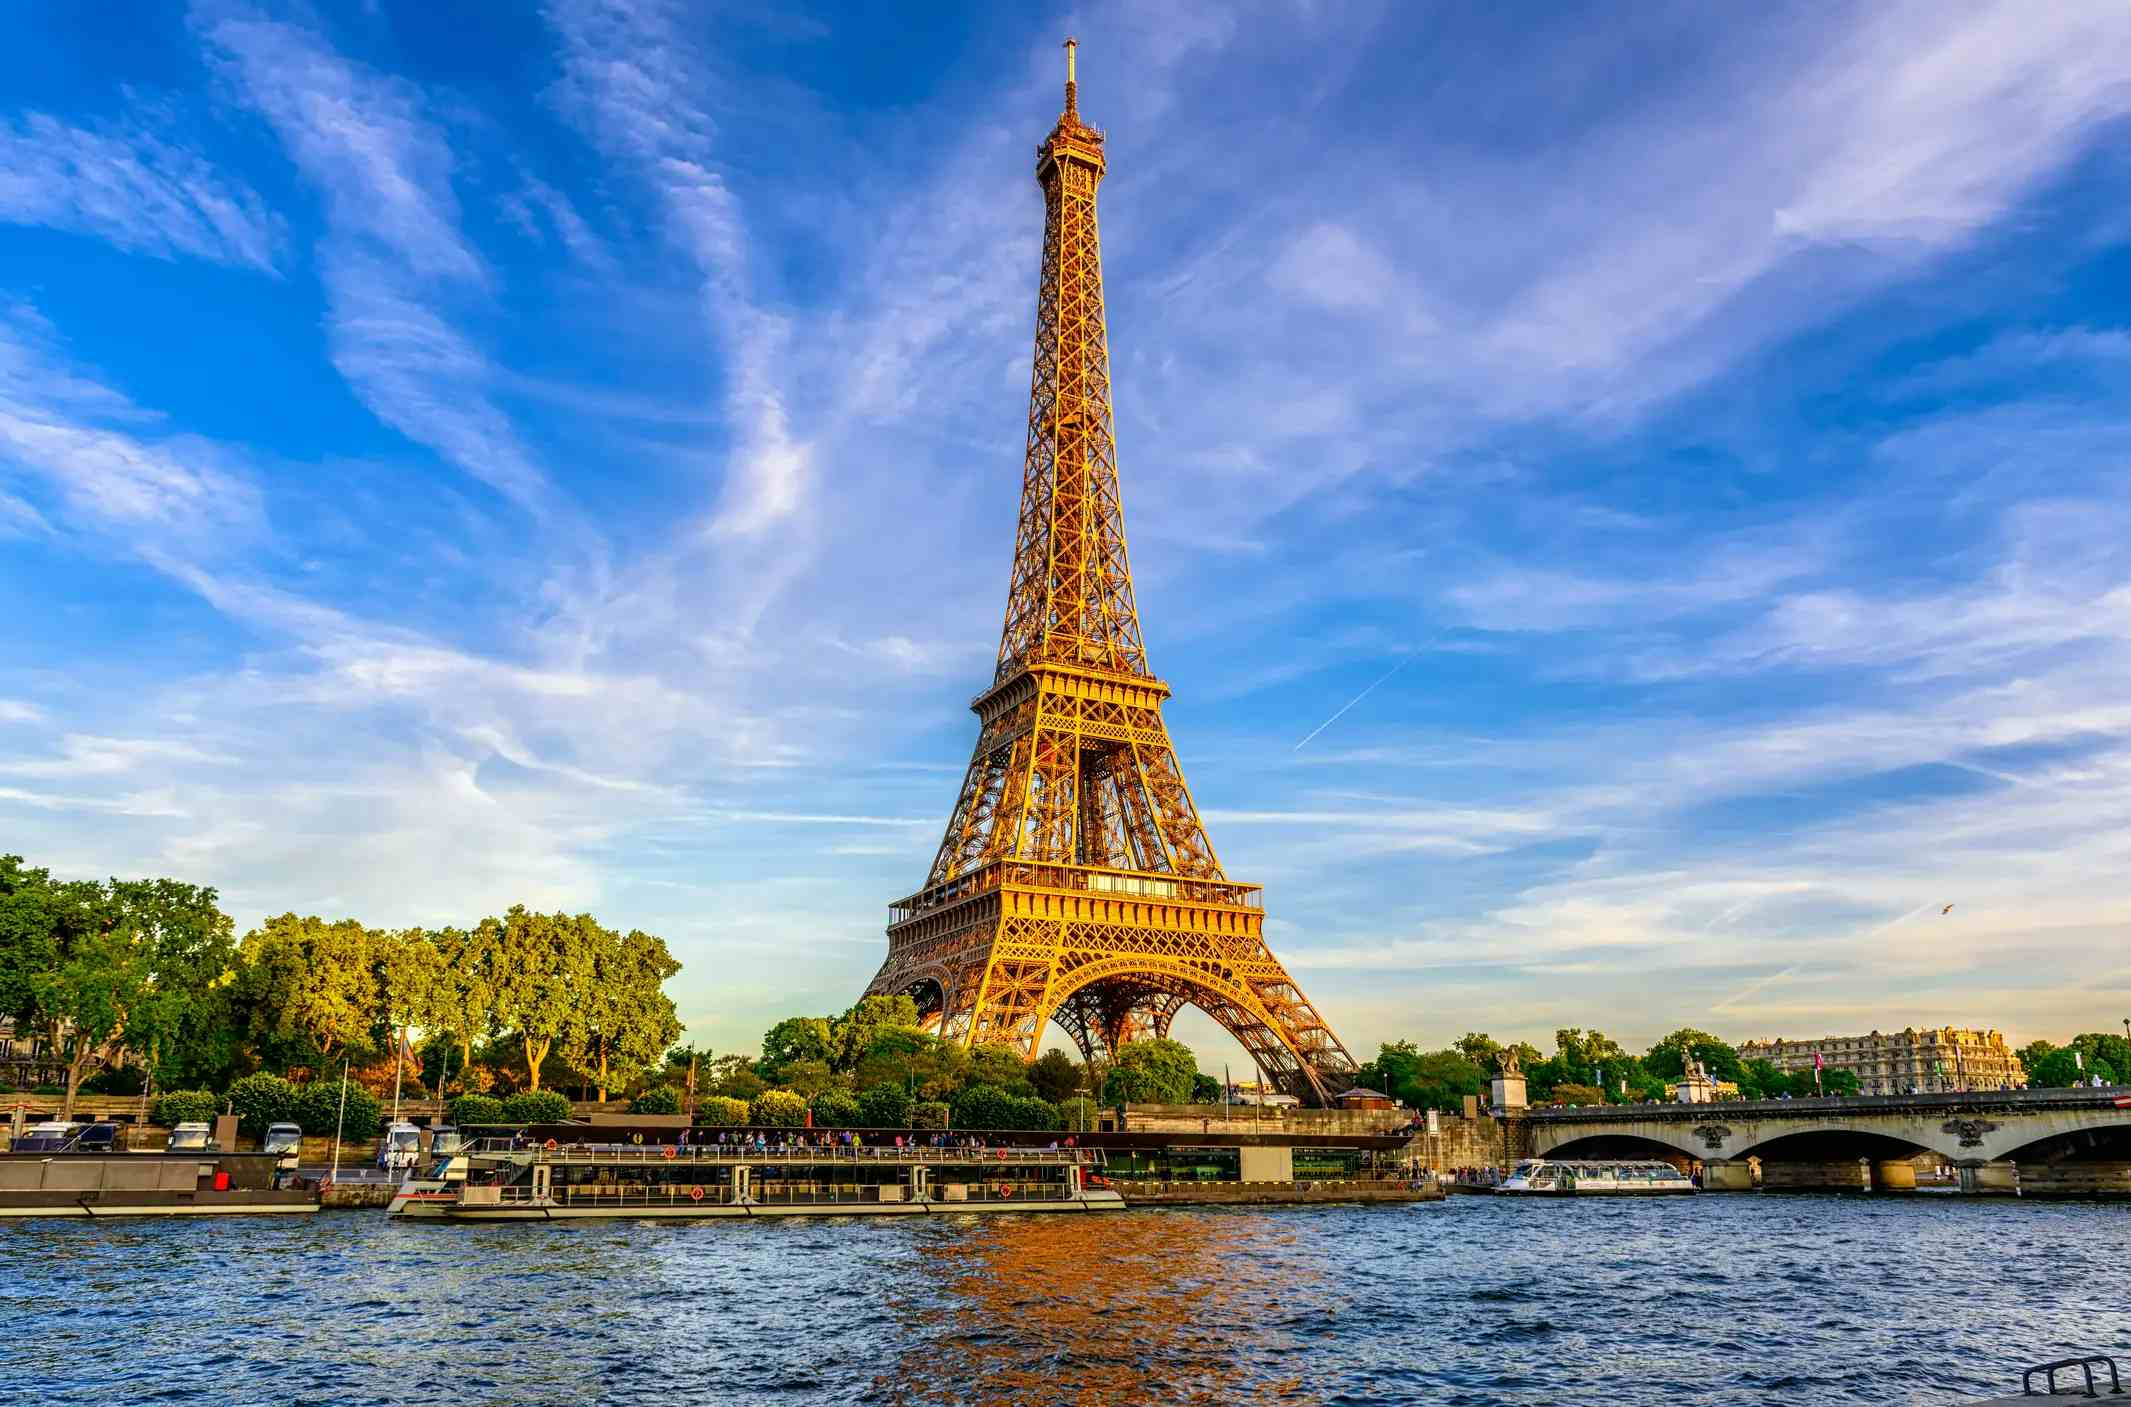 Torre Eiffel image